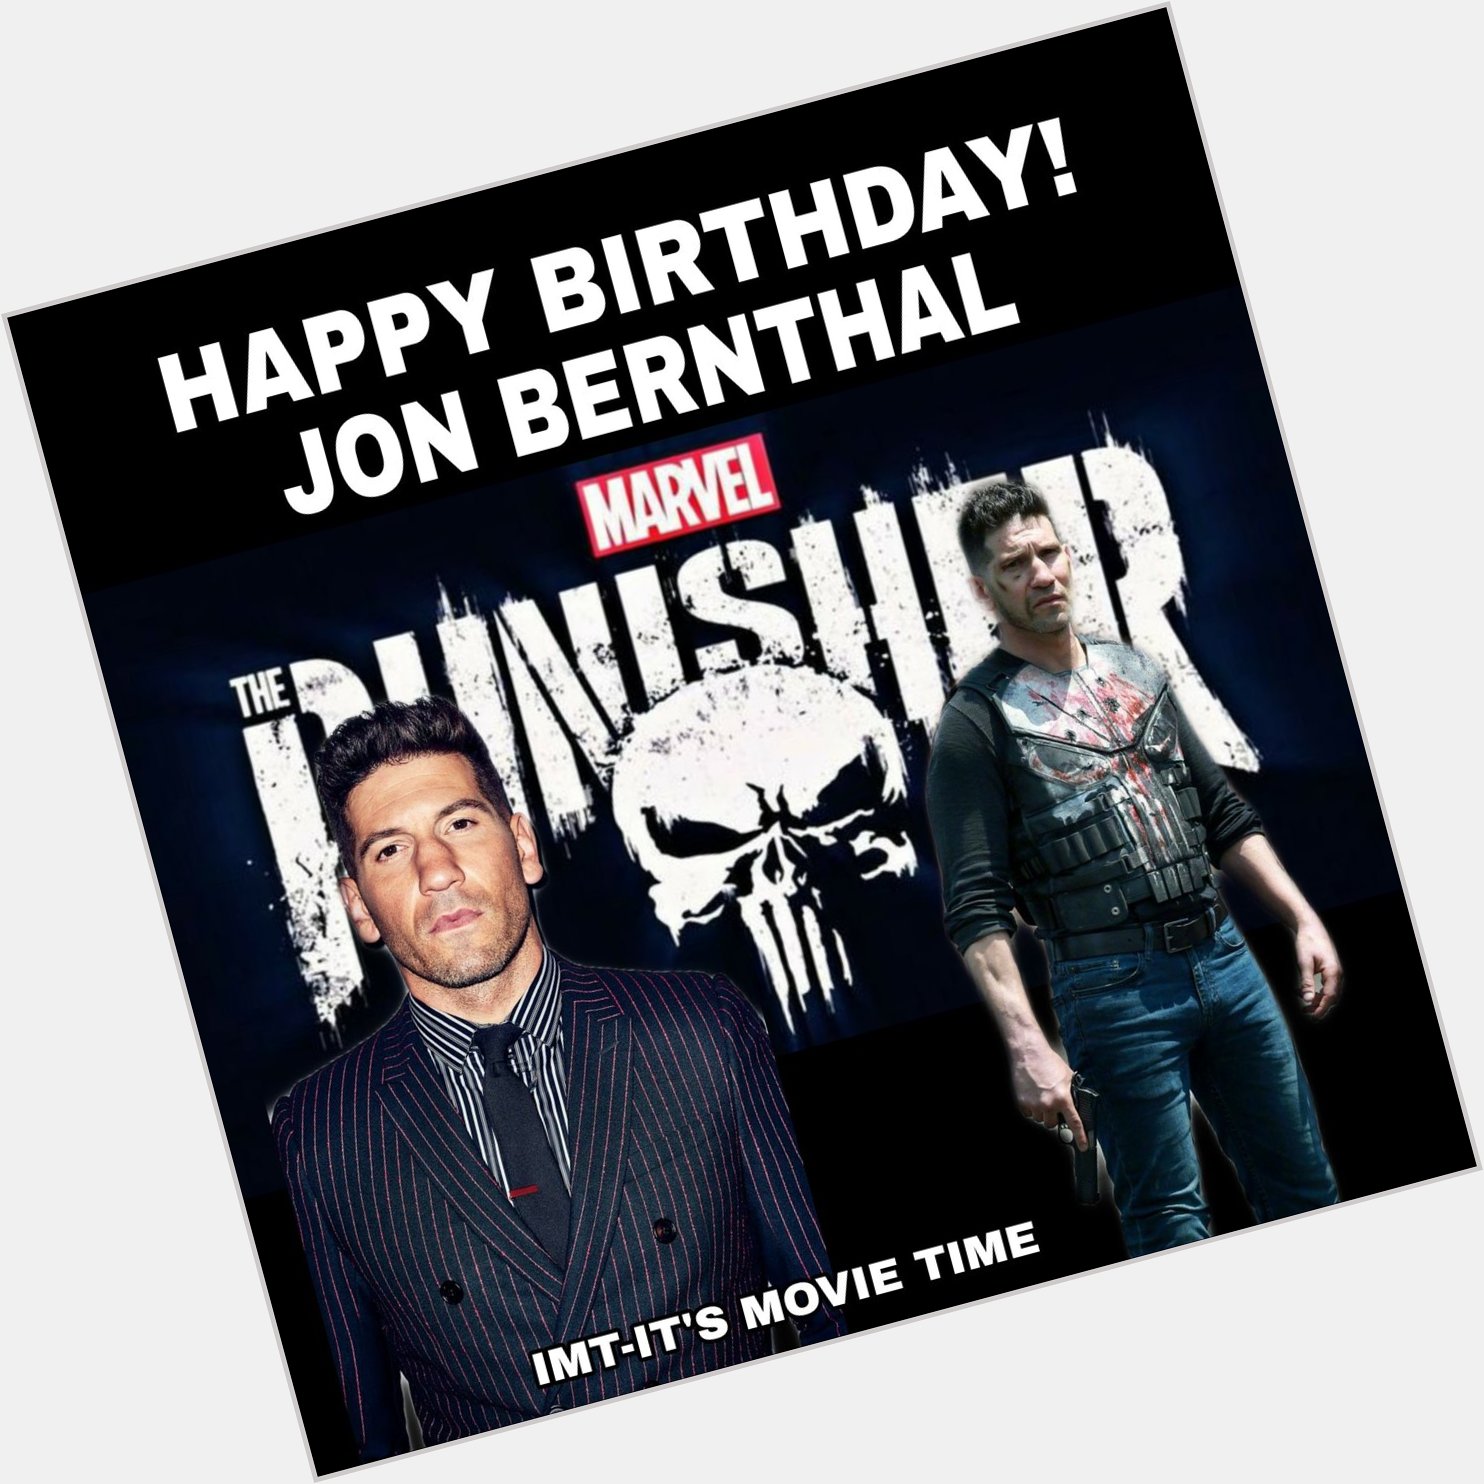 Happy Birthday to Jon Bernthal!
The actor is celebrating 44 years. 